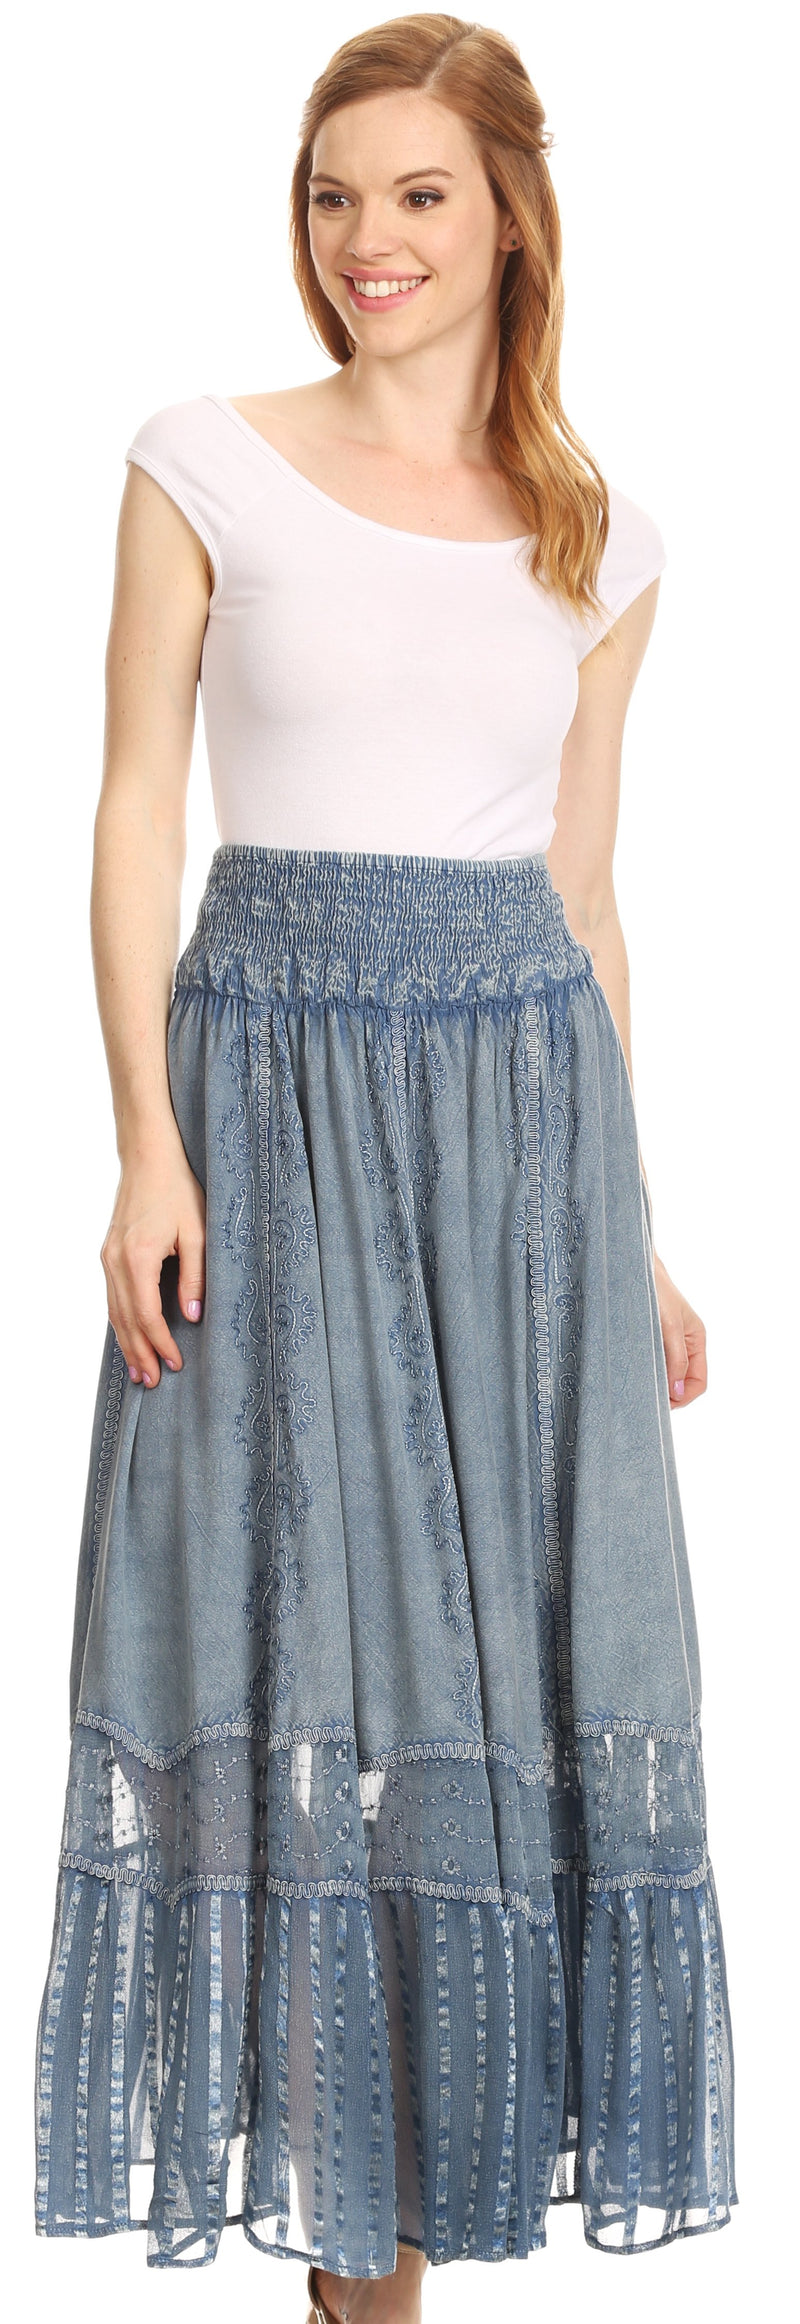 Sakkas Shamim Boho Maxi Long Skirt with Sheer Textured Panels W/ Smocked Waistband